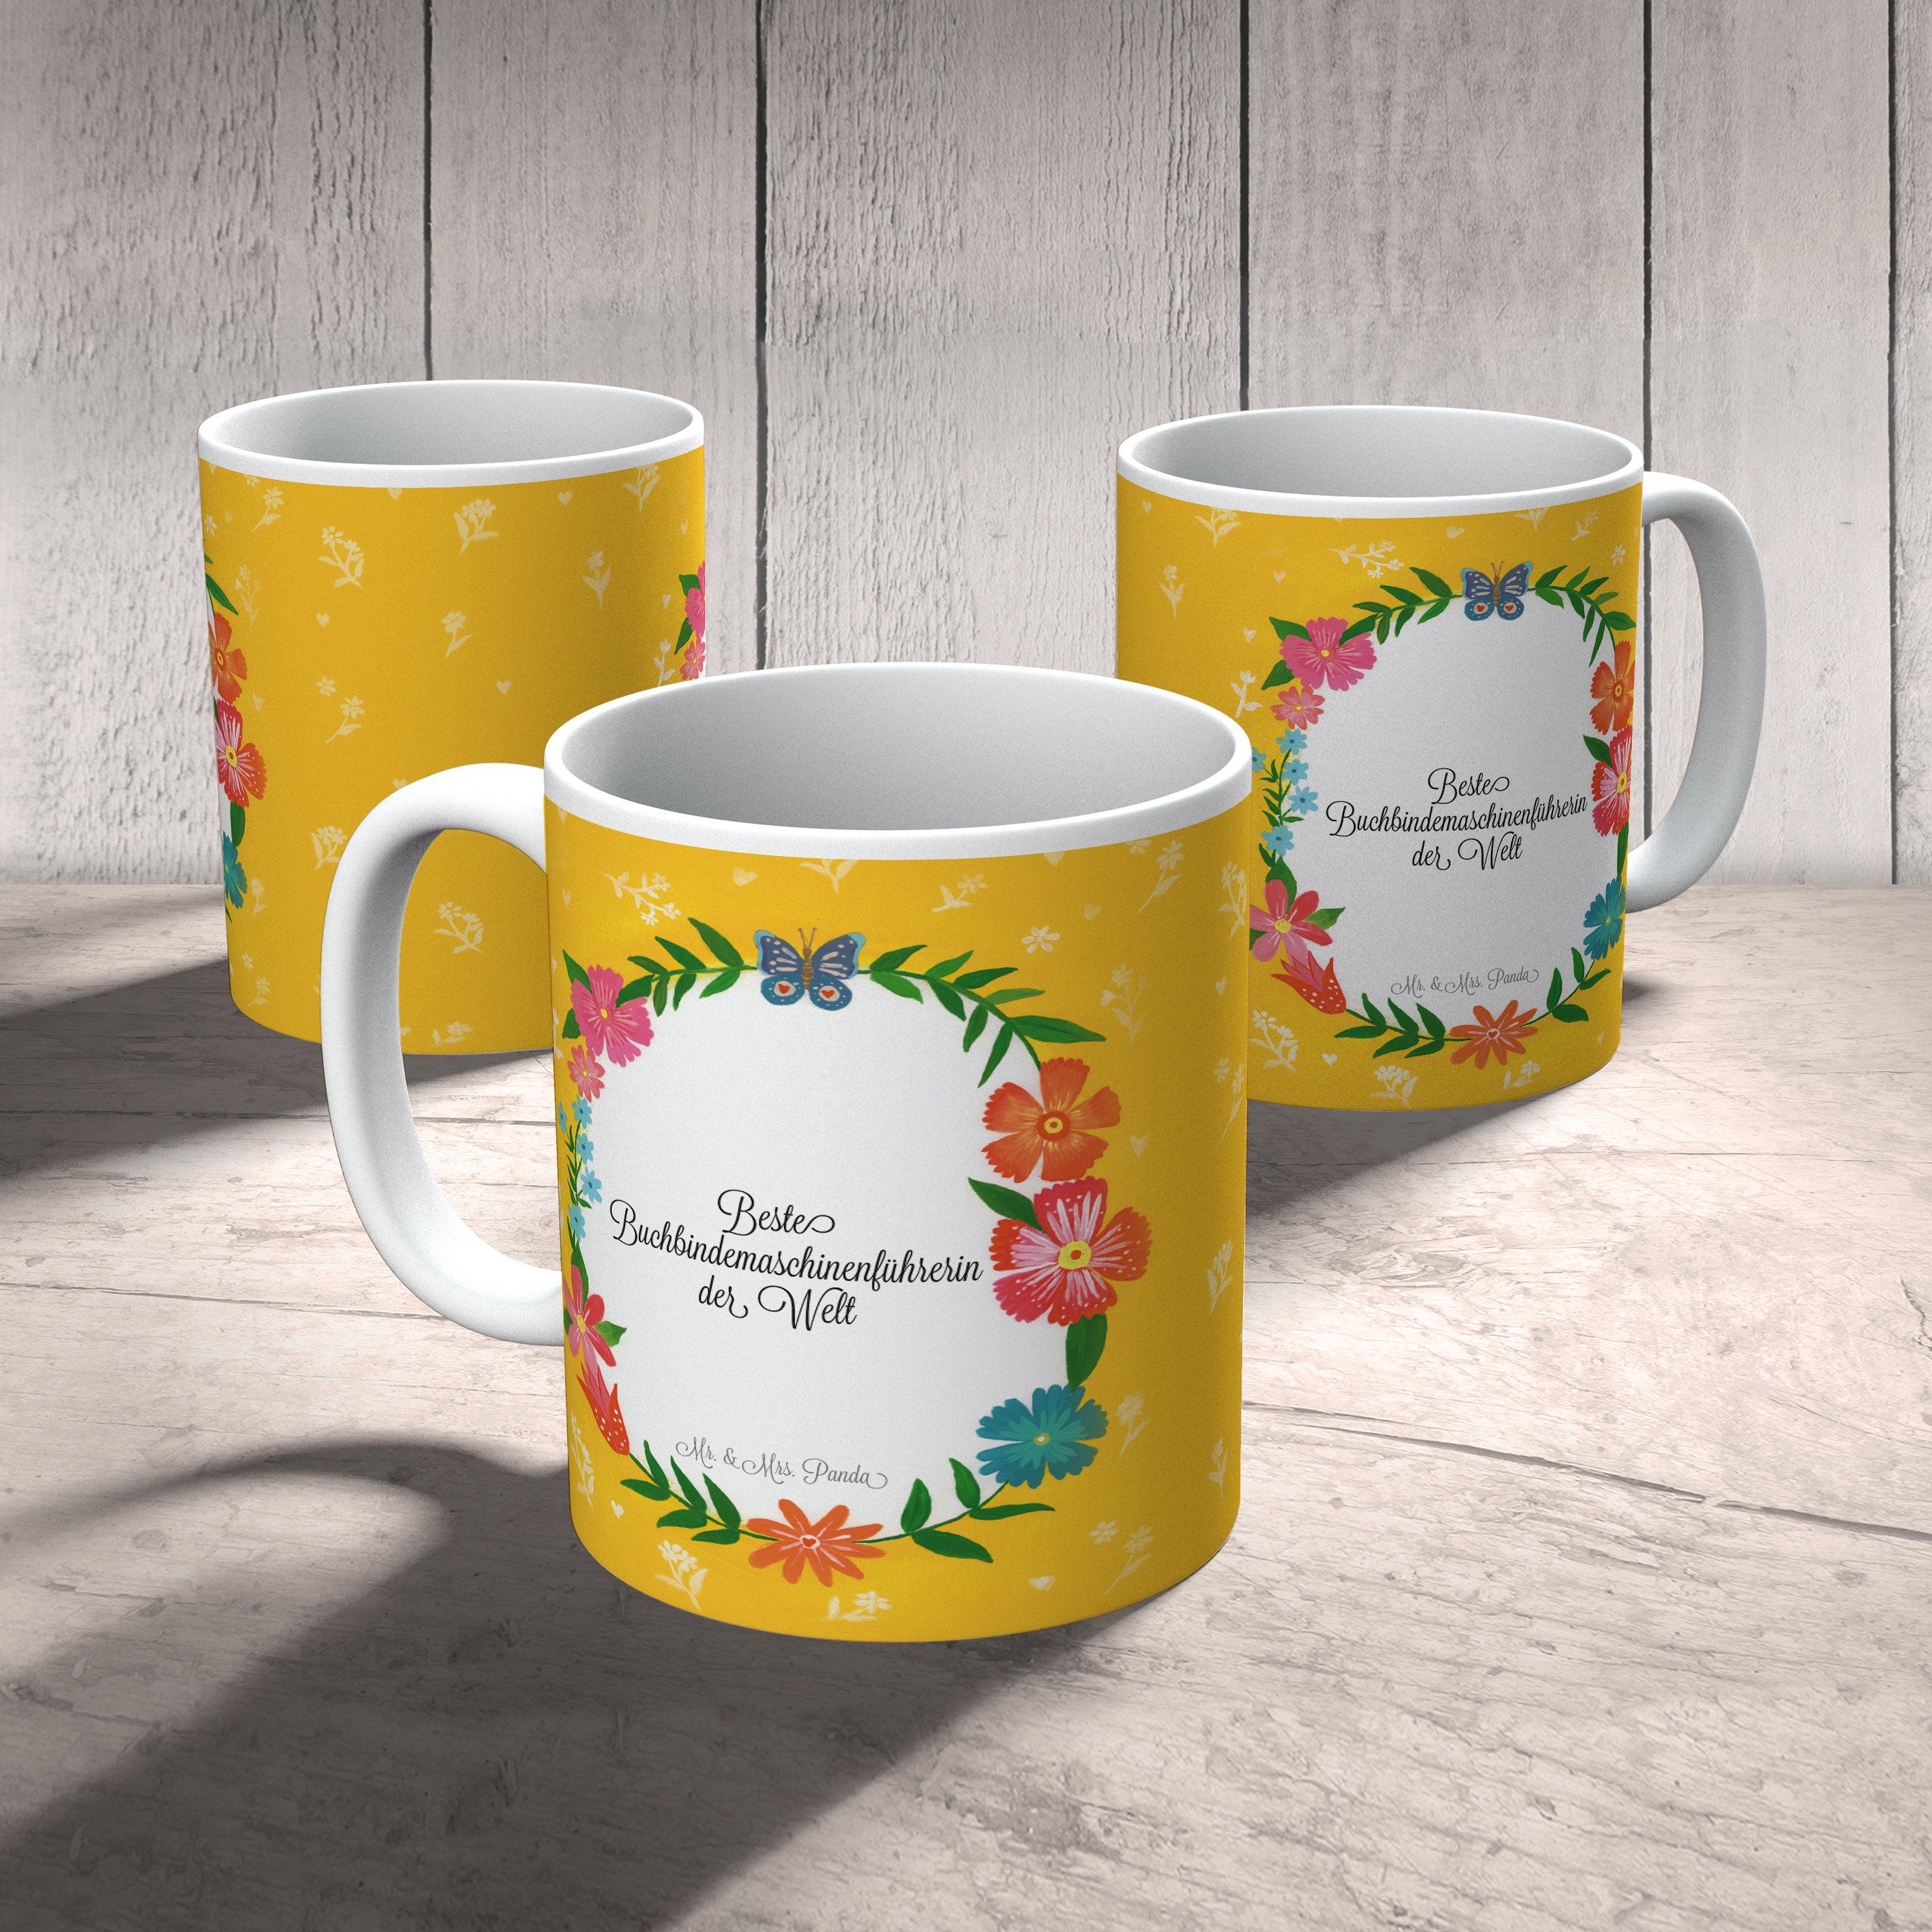 Motive, Geschenk, Beruf, Mrs. Mr. Panda Buchbindemaschinenführerin - Tasse Teetasse, Keramik Tasse &